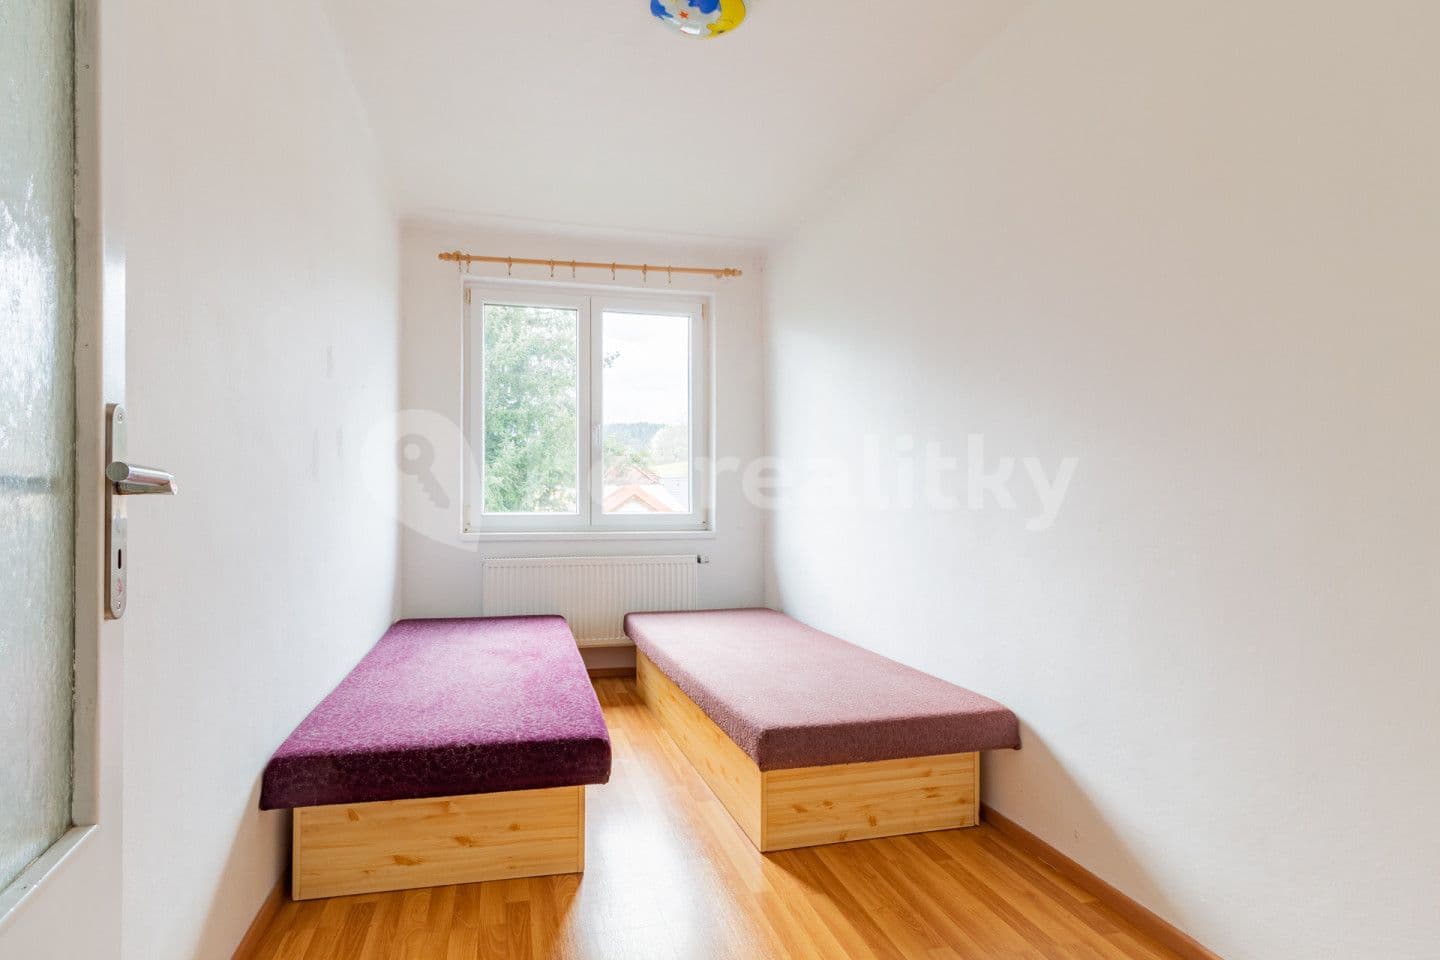 3 bedroom flat for sale, 63 m², Volenice, Jihočeský Region